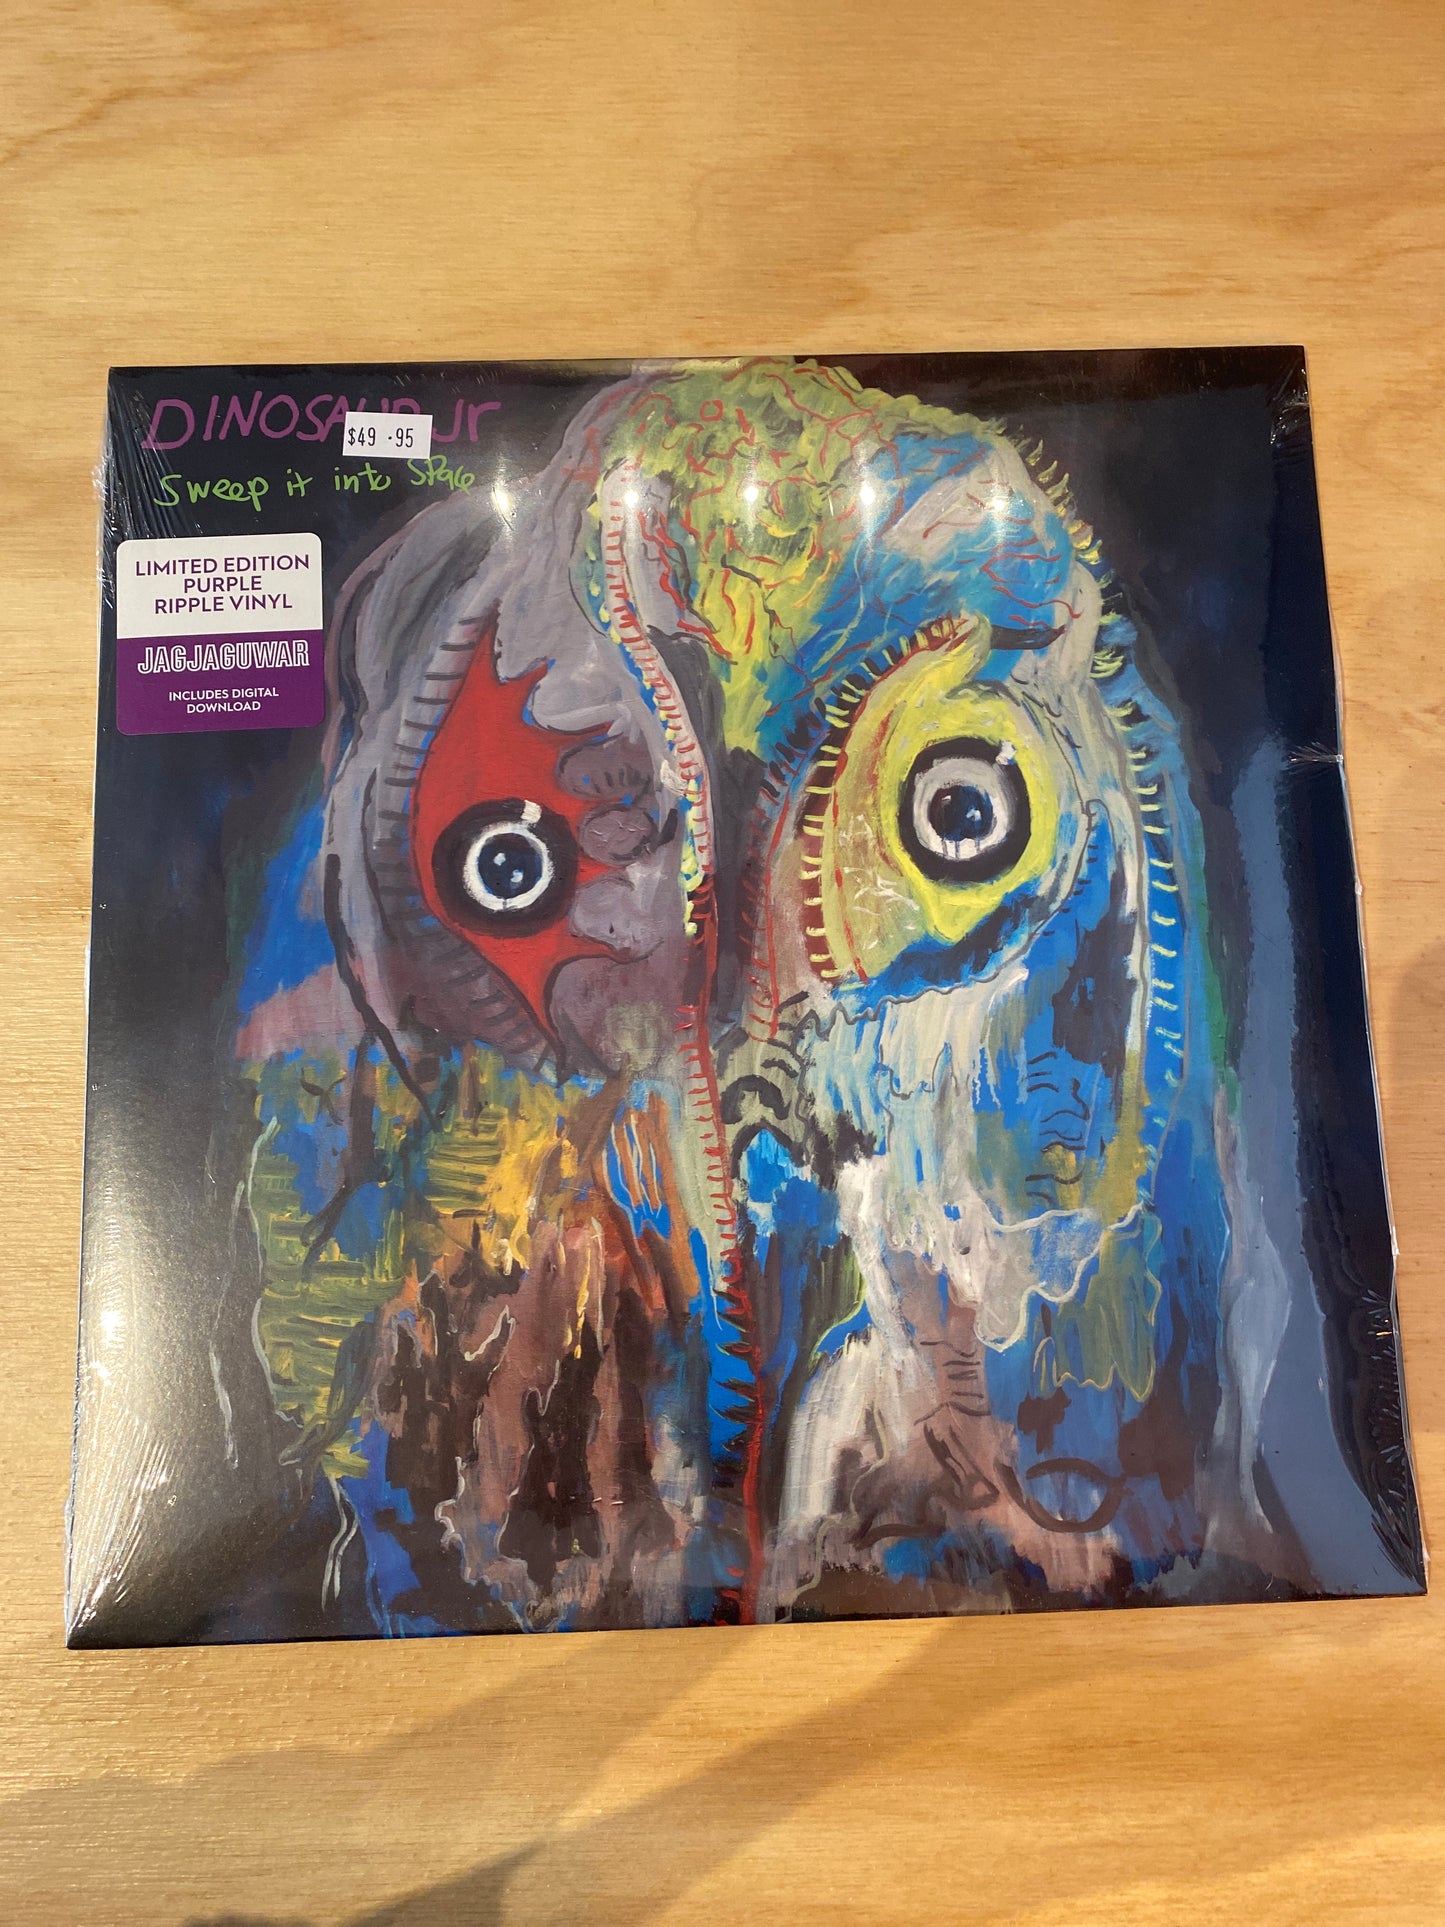 Dinosaur Jr - Sweep it into Space - Vinyl LP